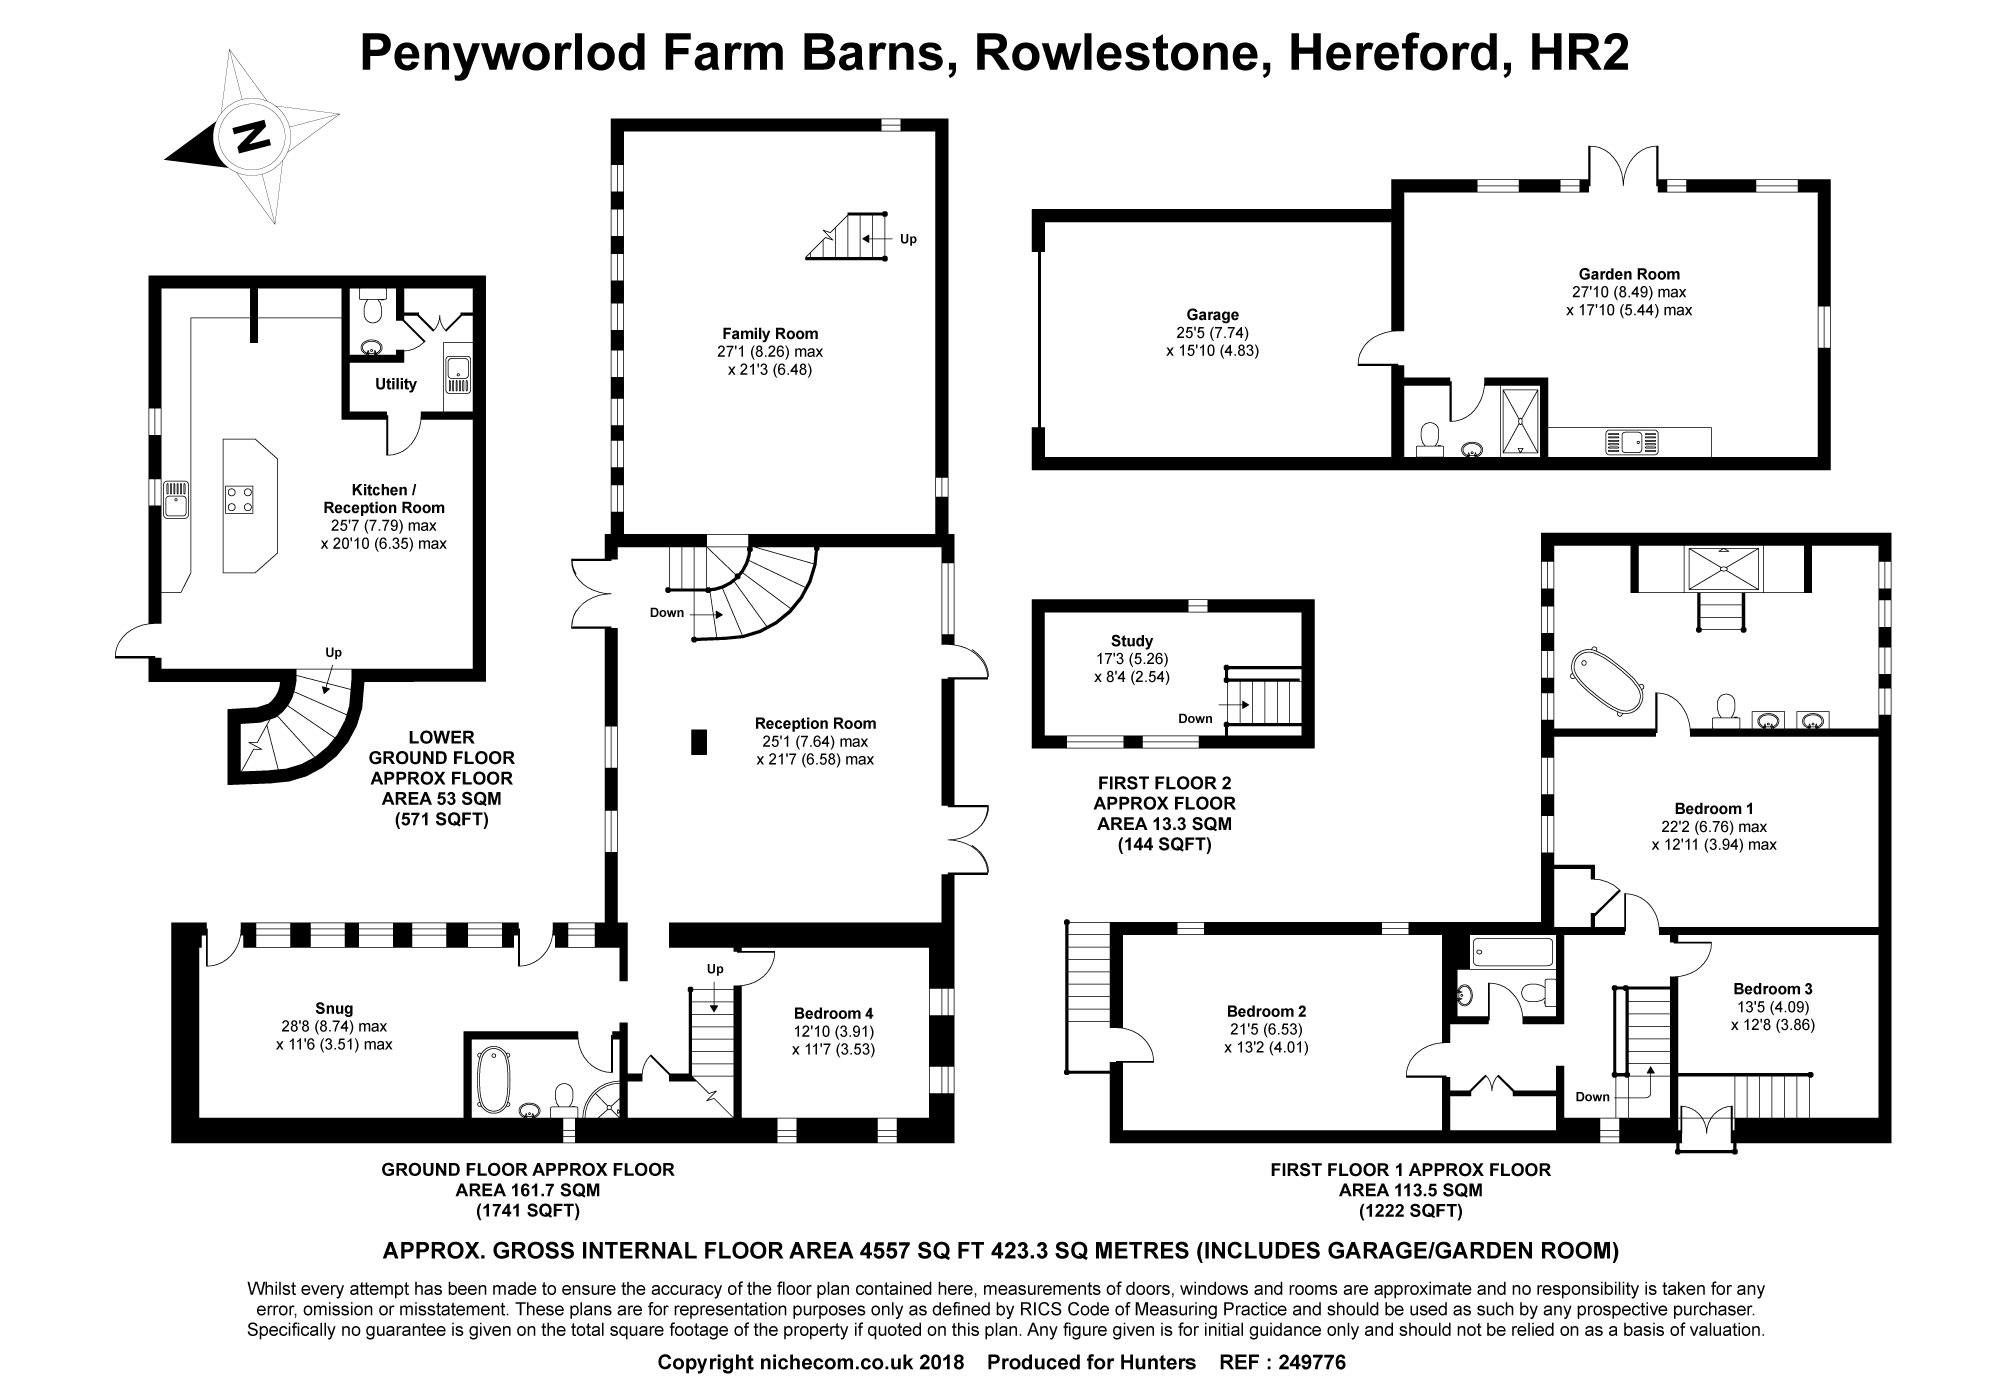 4 Bedrooms Barn conversion for sale in No 1 Penyworlod Barn, Rowlestone, Hereford HR2